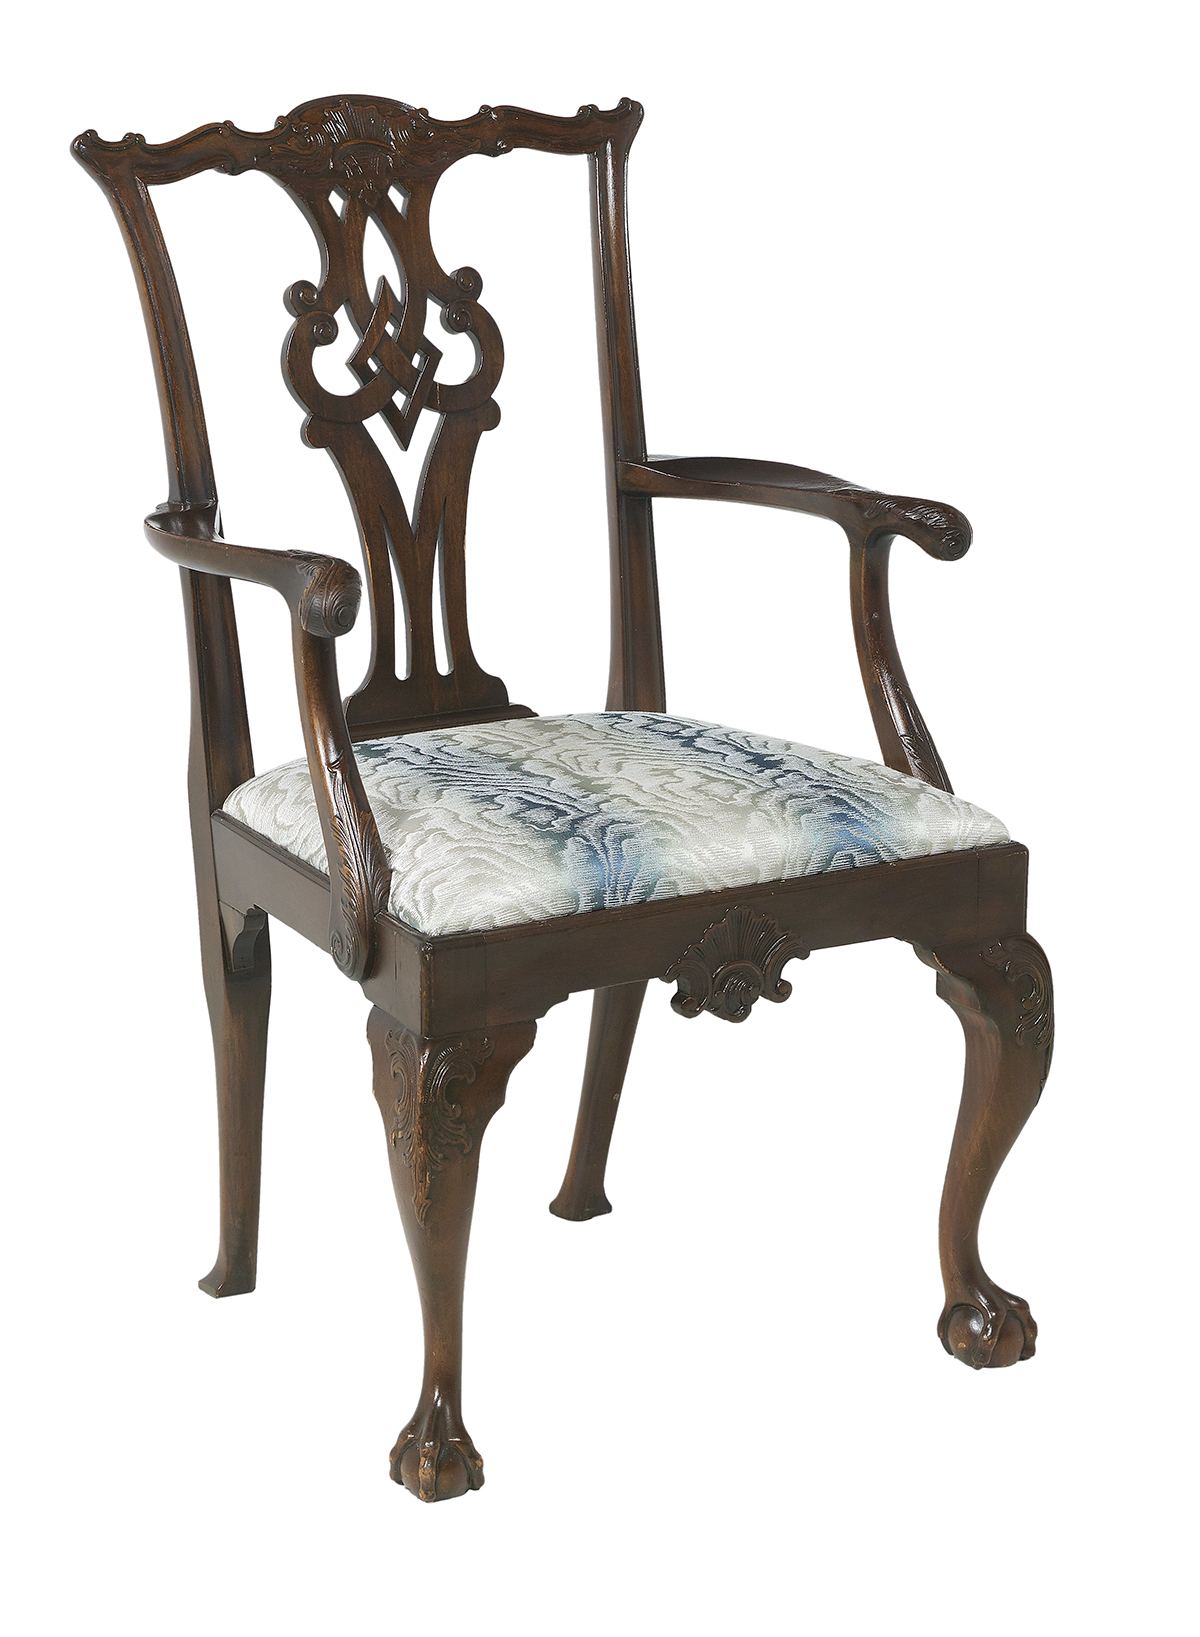 Twelve George III-Style Mahogany Dining Chairs - Image 2 of 2